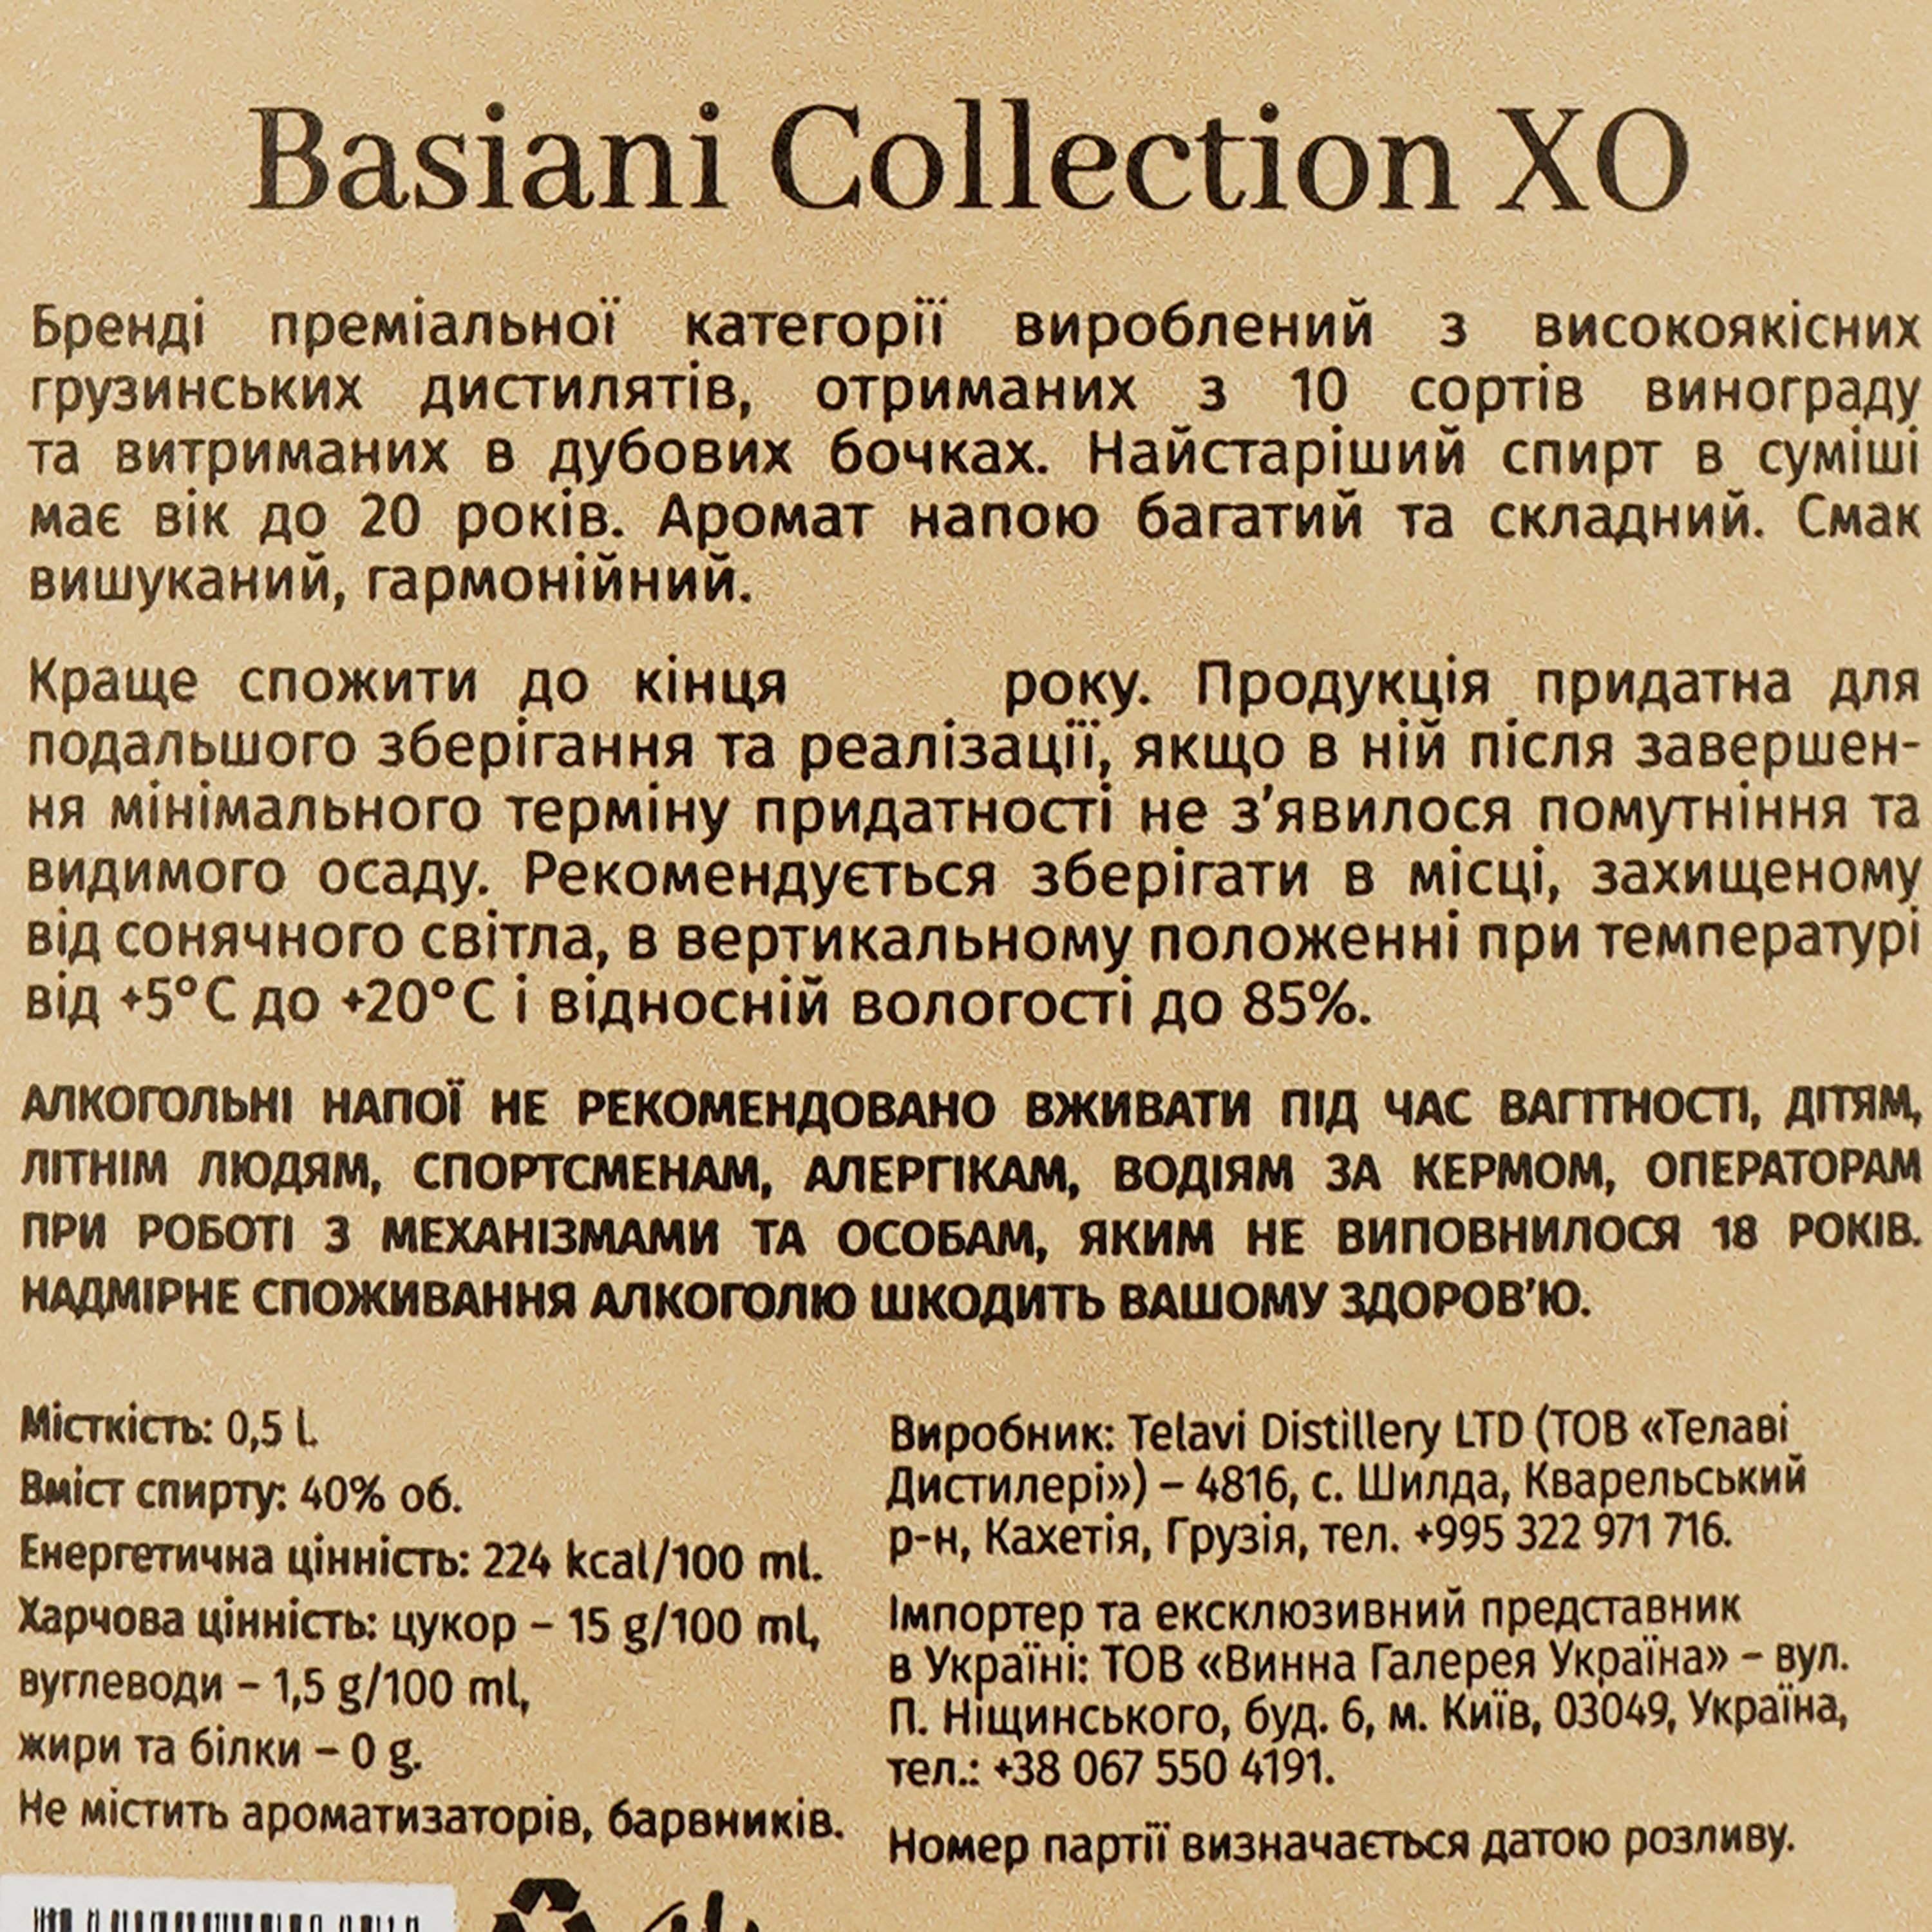 Бренди Shilda Basiani Collection XO, 40%, 0,5 л - фото 3